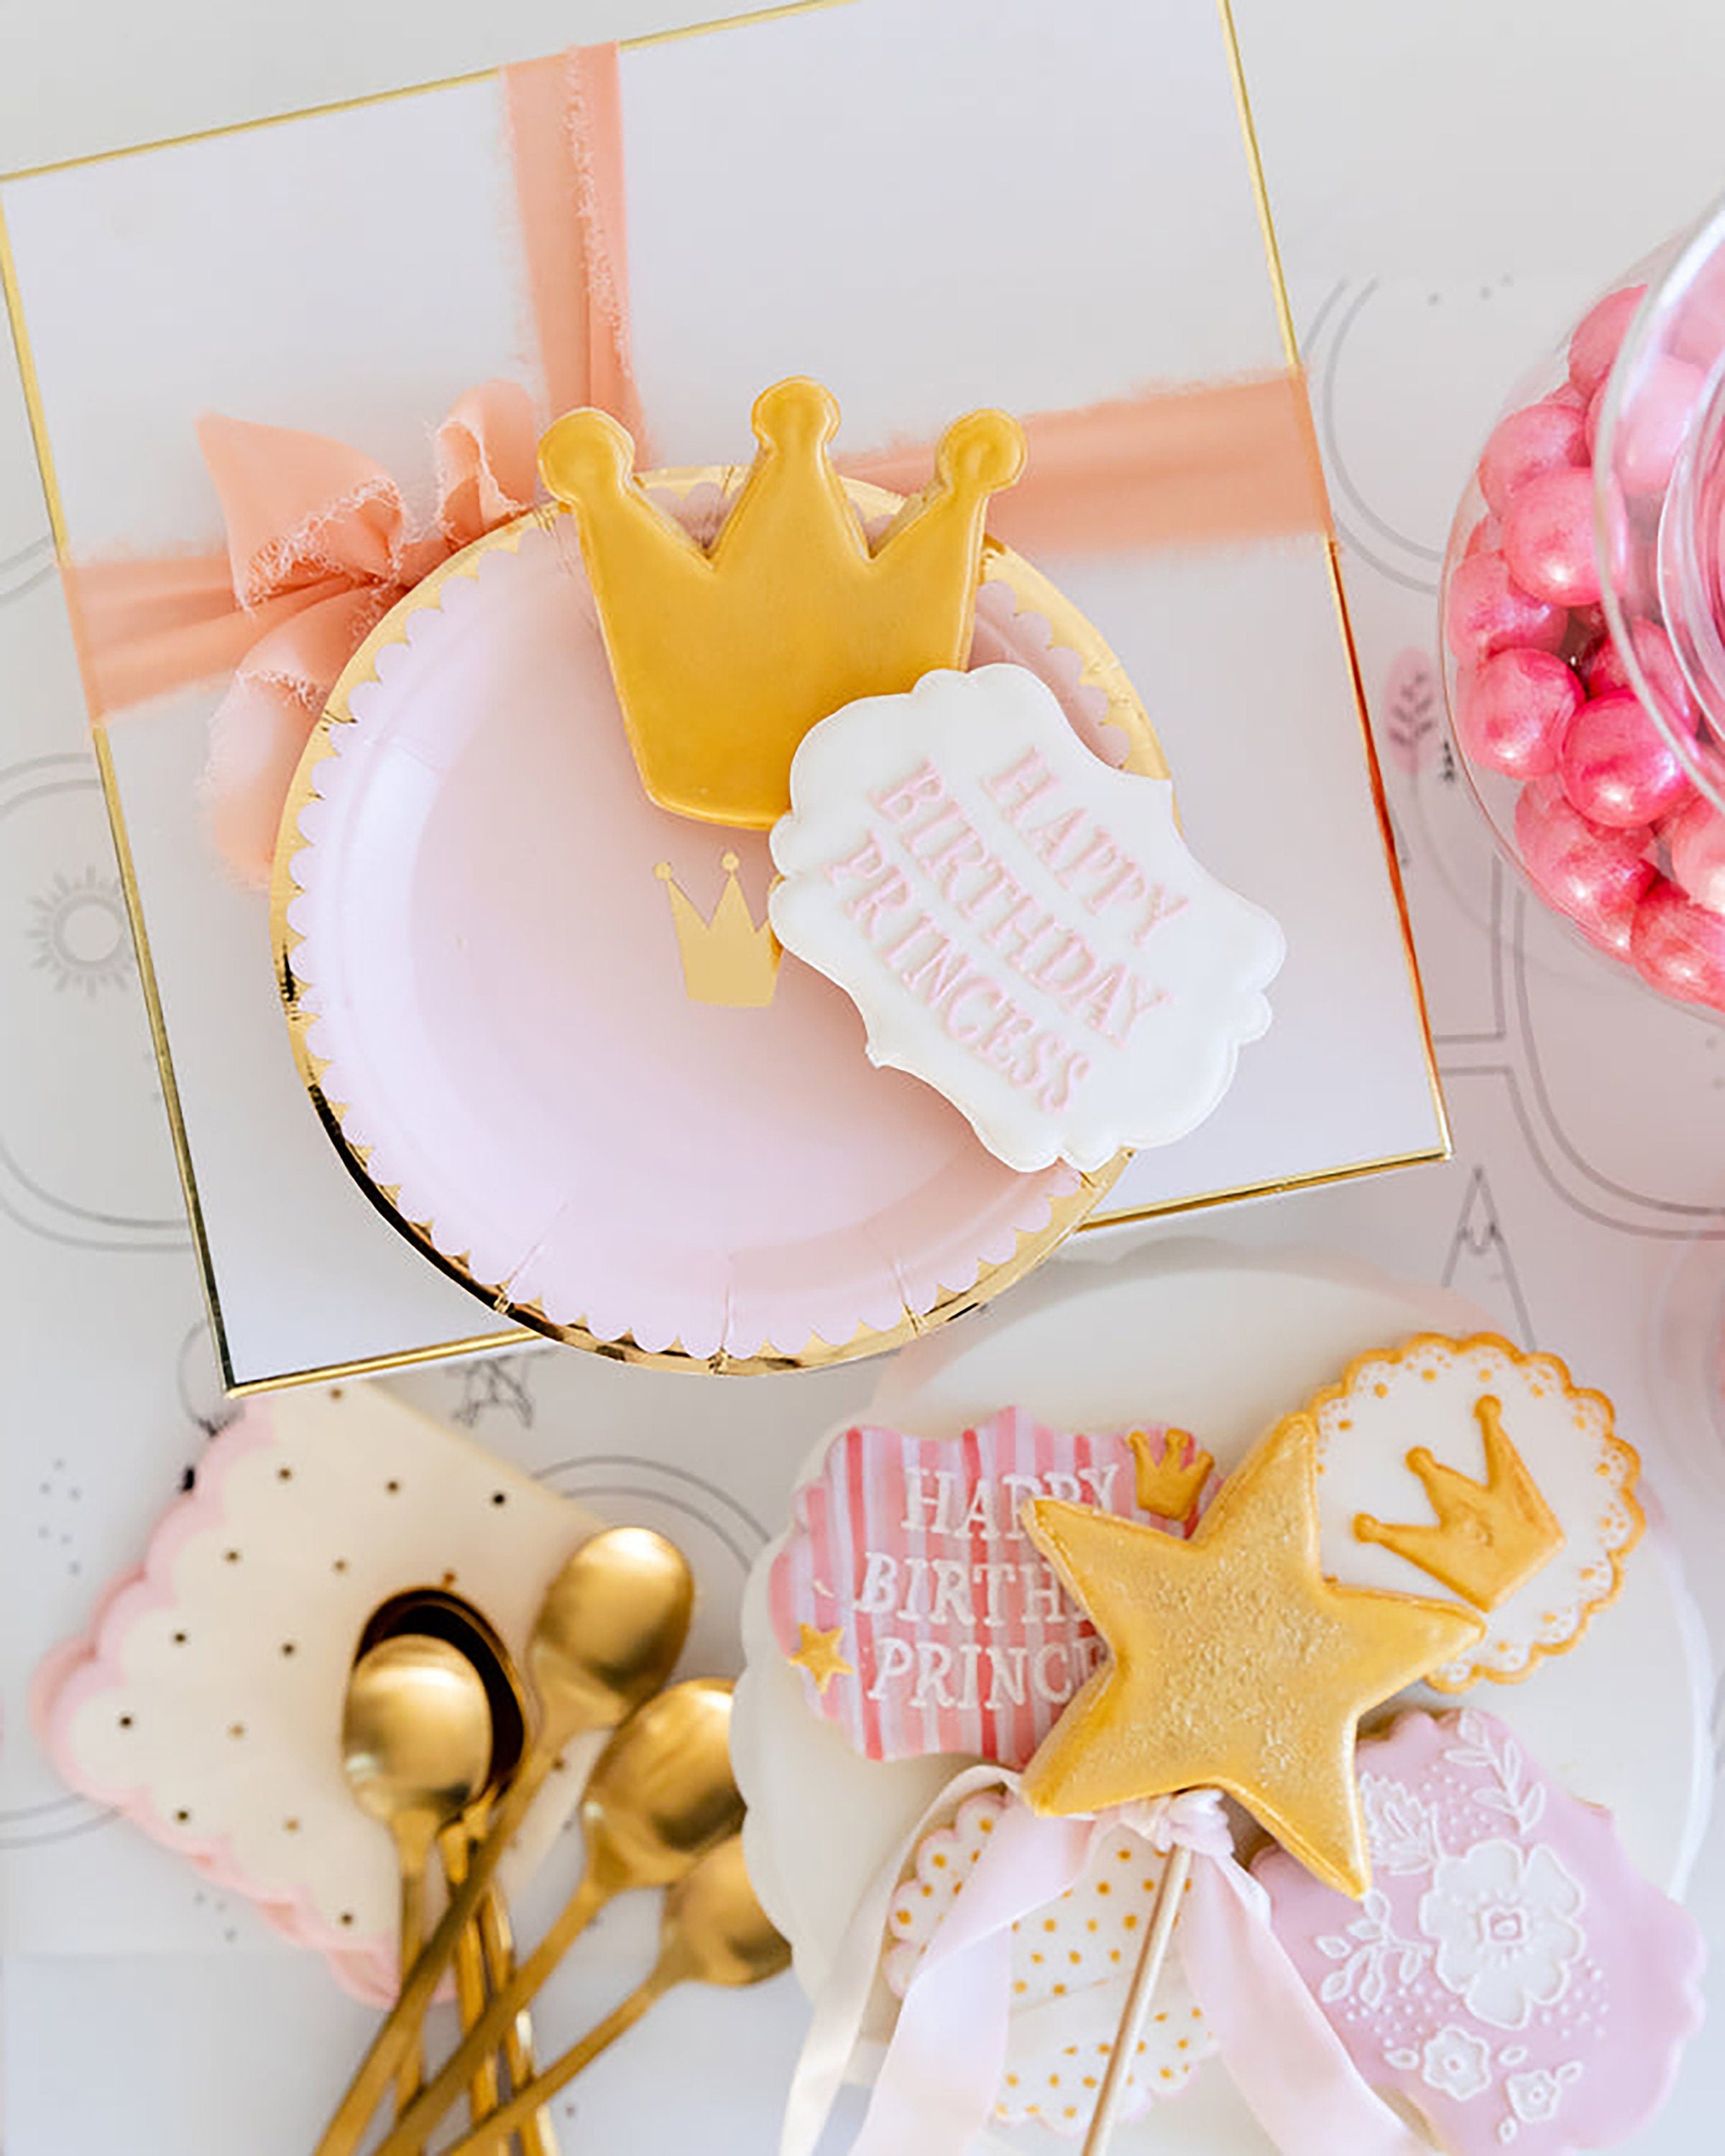 Princess Banner | Princess Party Decorations - Princess Birthday Party Decorations - Princess Tea Party - Princess Baby Shower Decorations